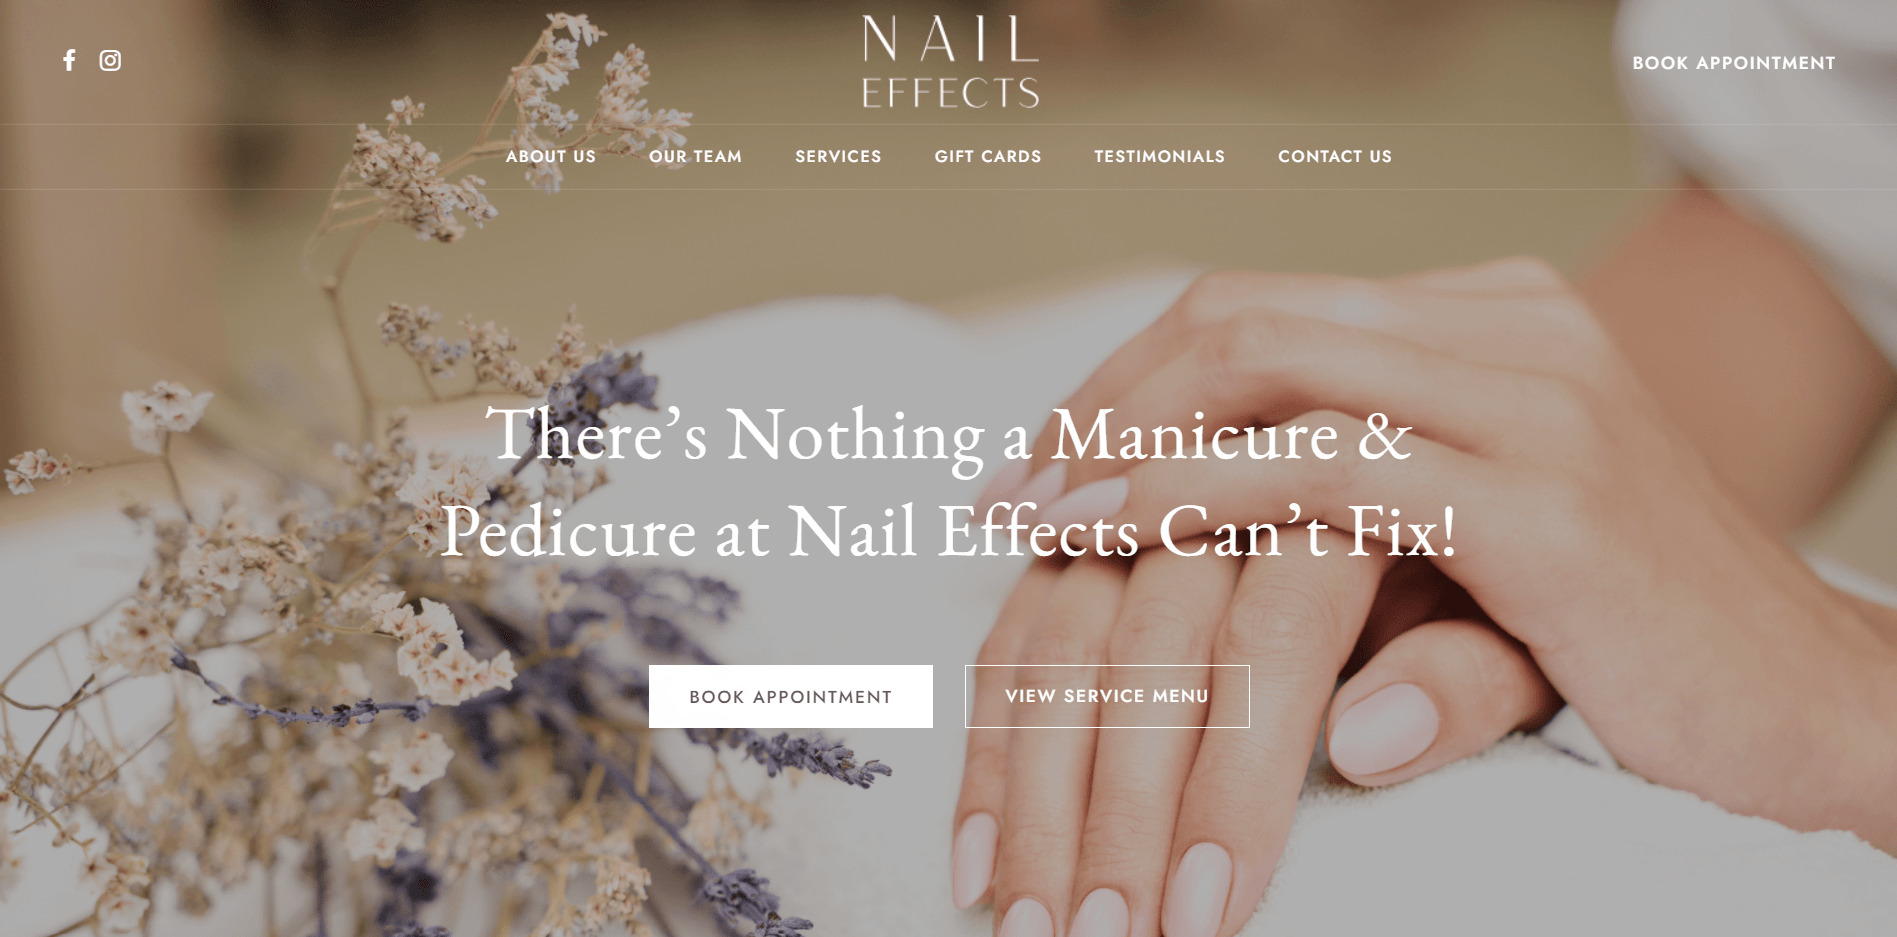 Nail Salon Website Design